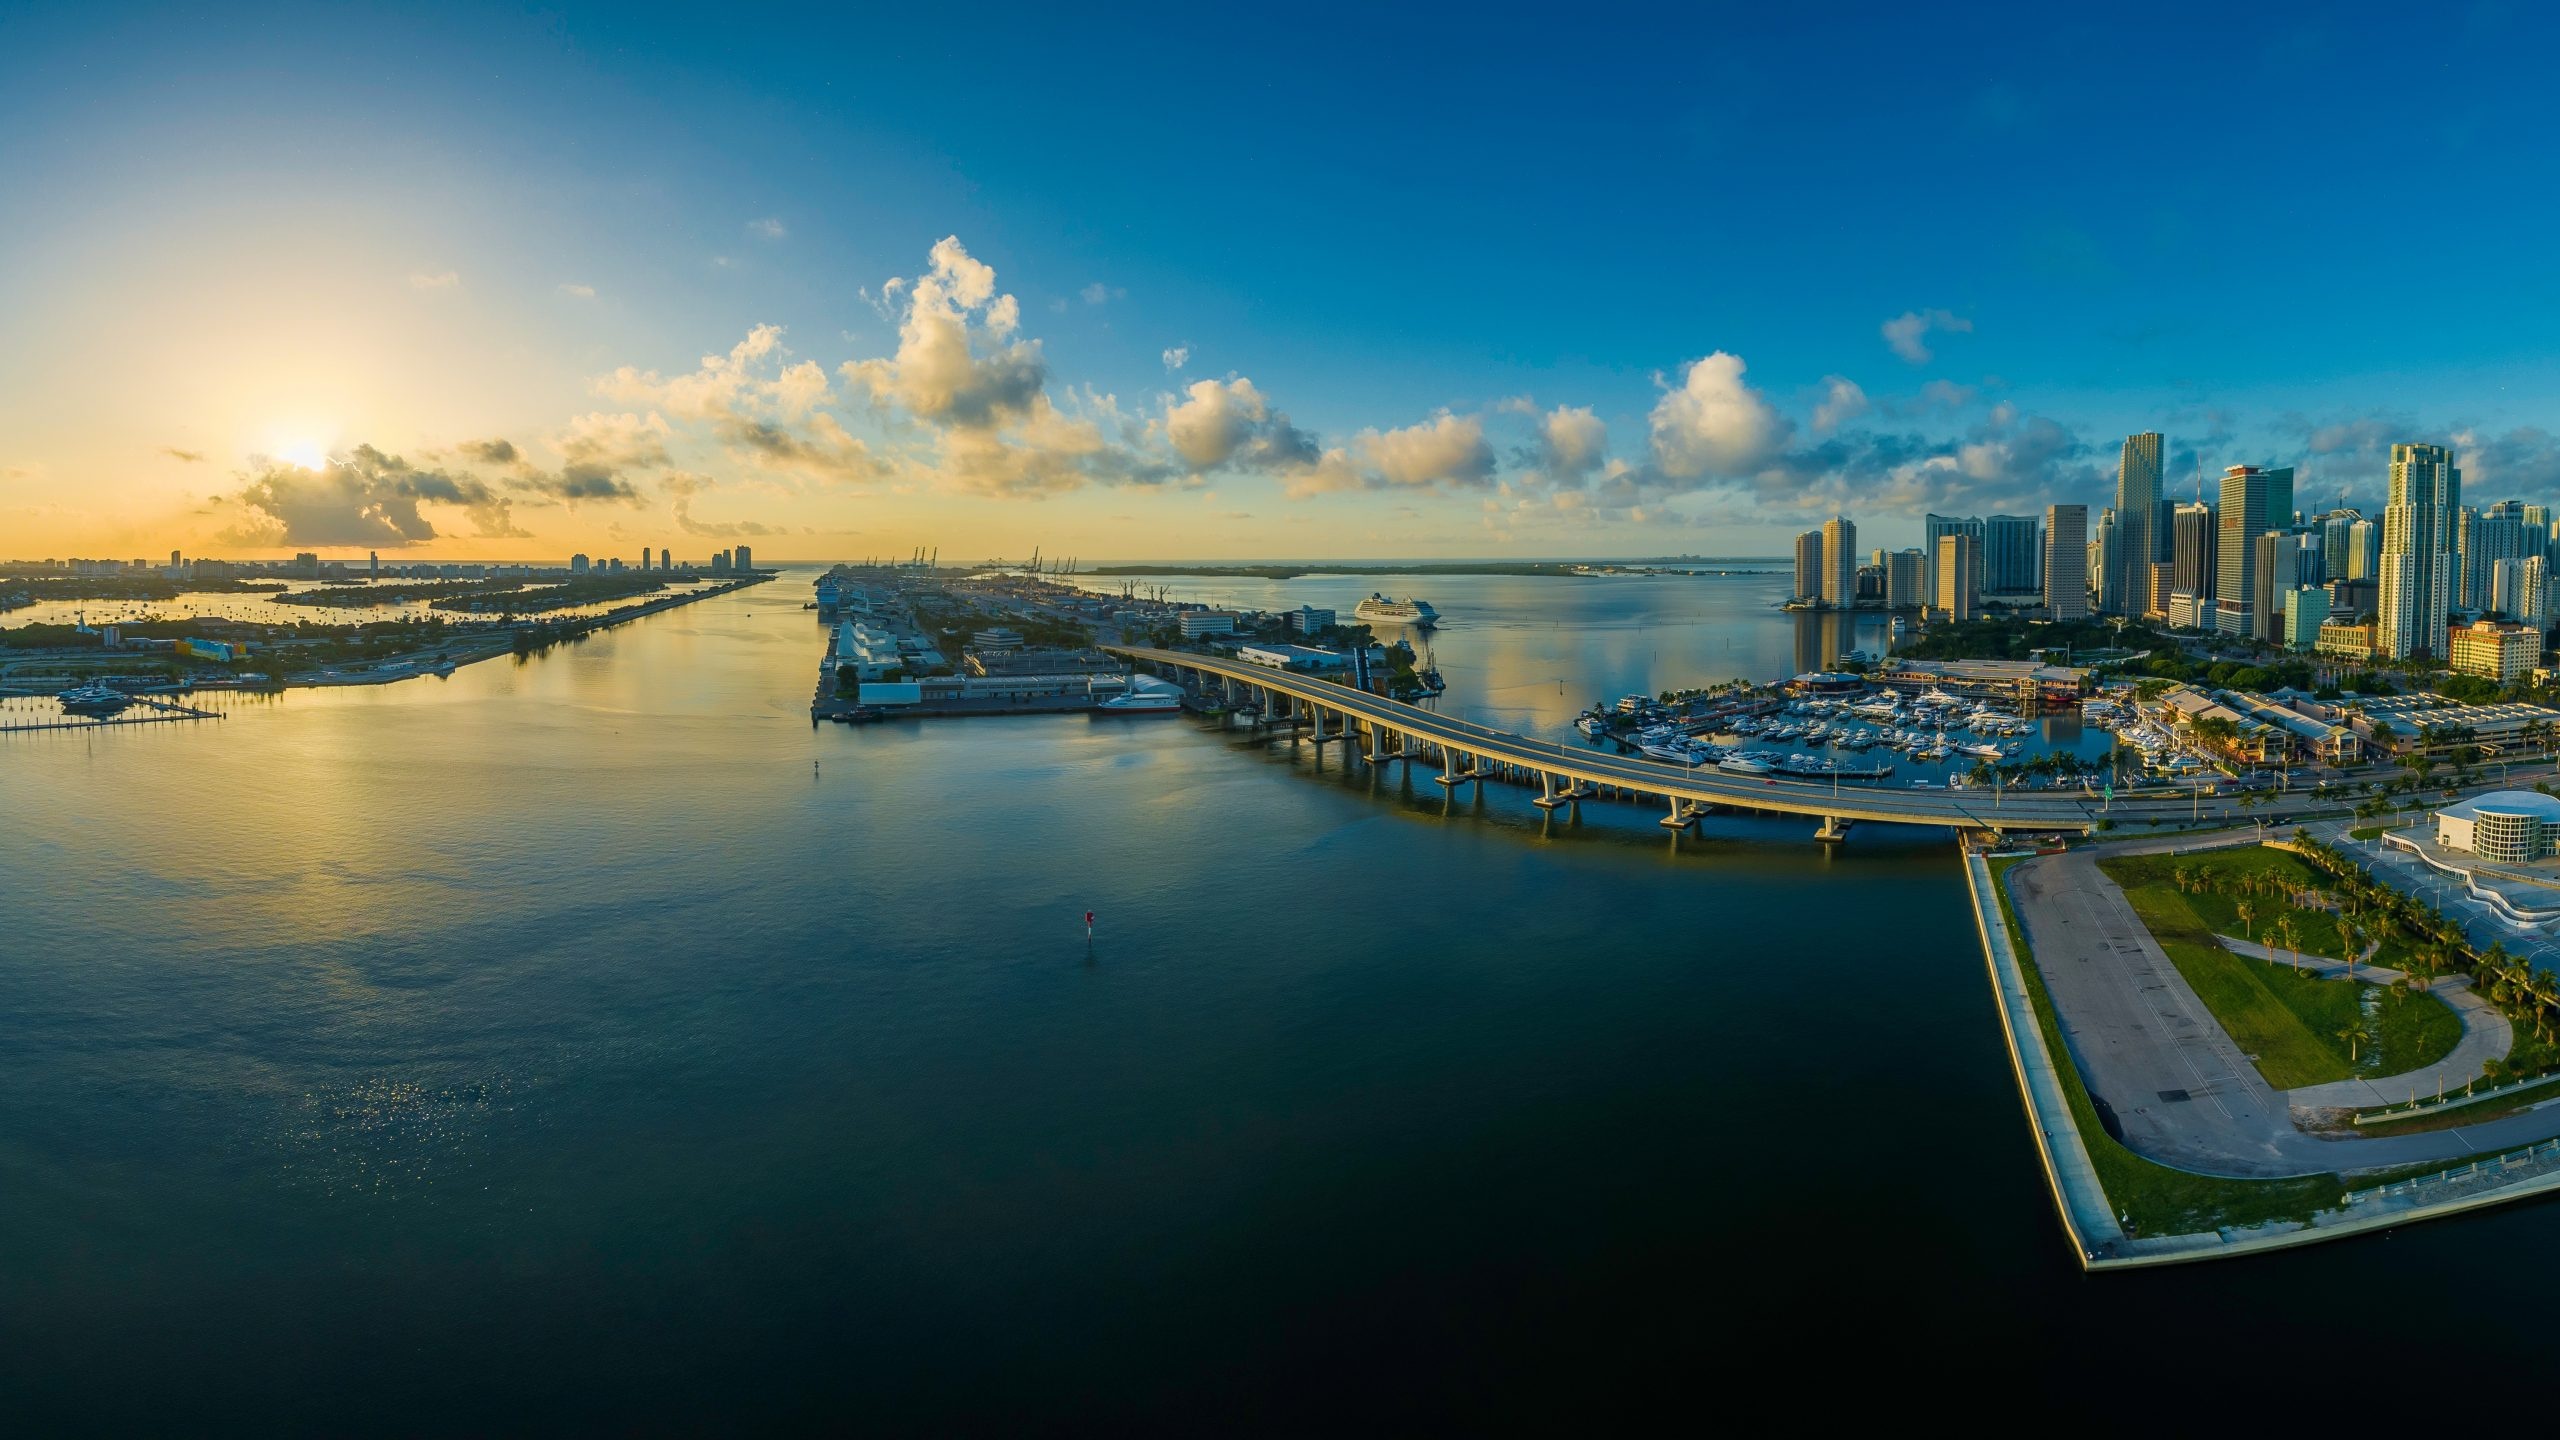 Miami travels, USA wallpaper, 5K resolution, Stunning views, 2560x1440 HD Desktop